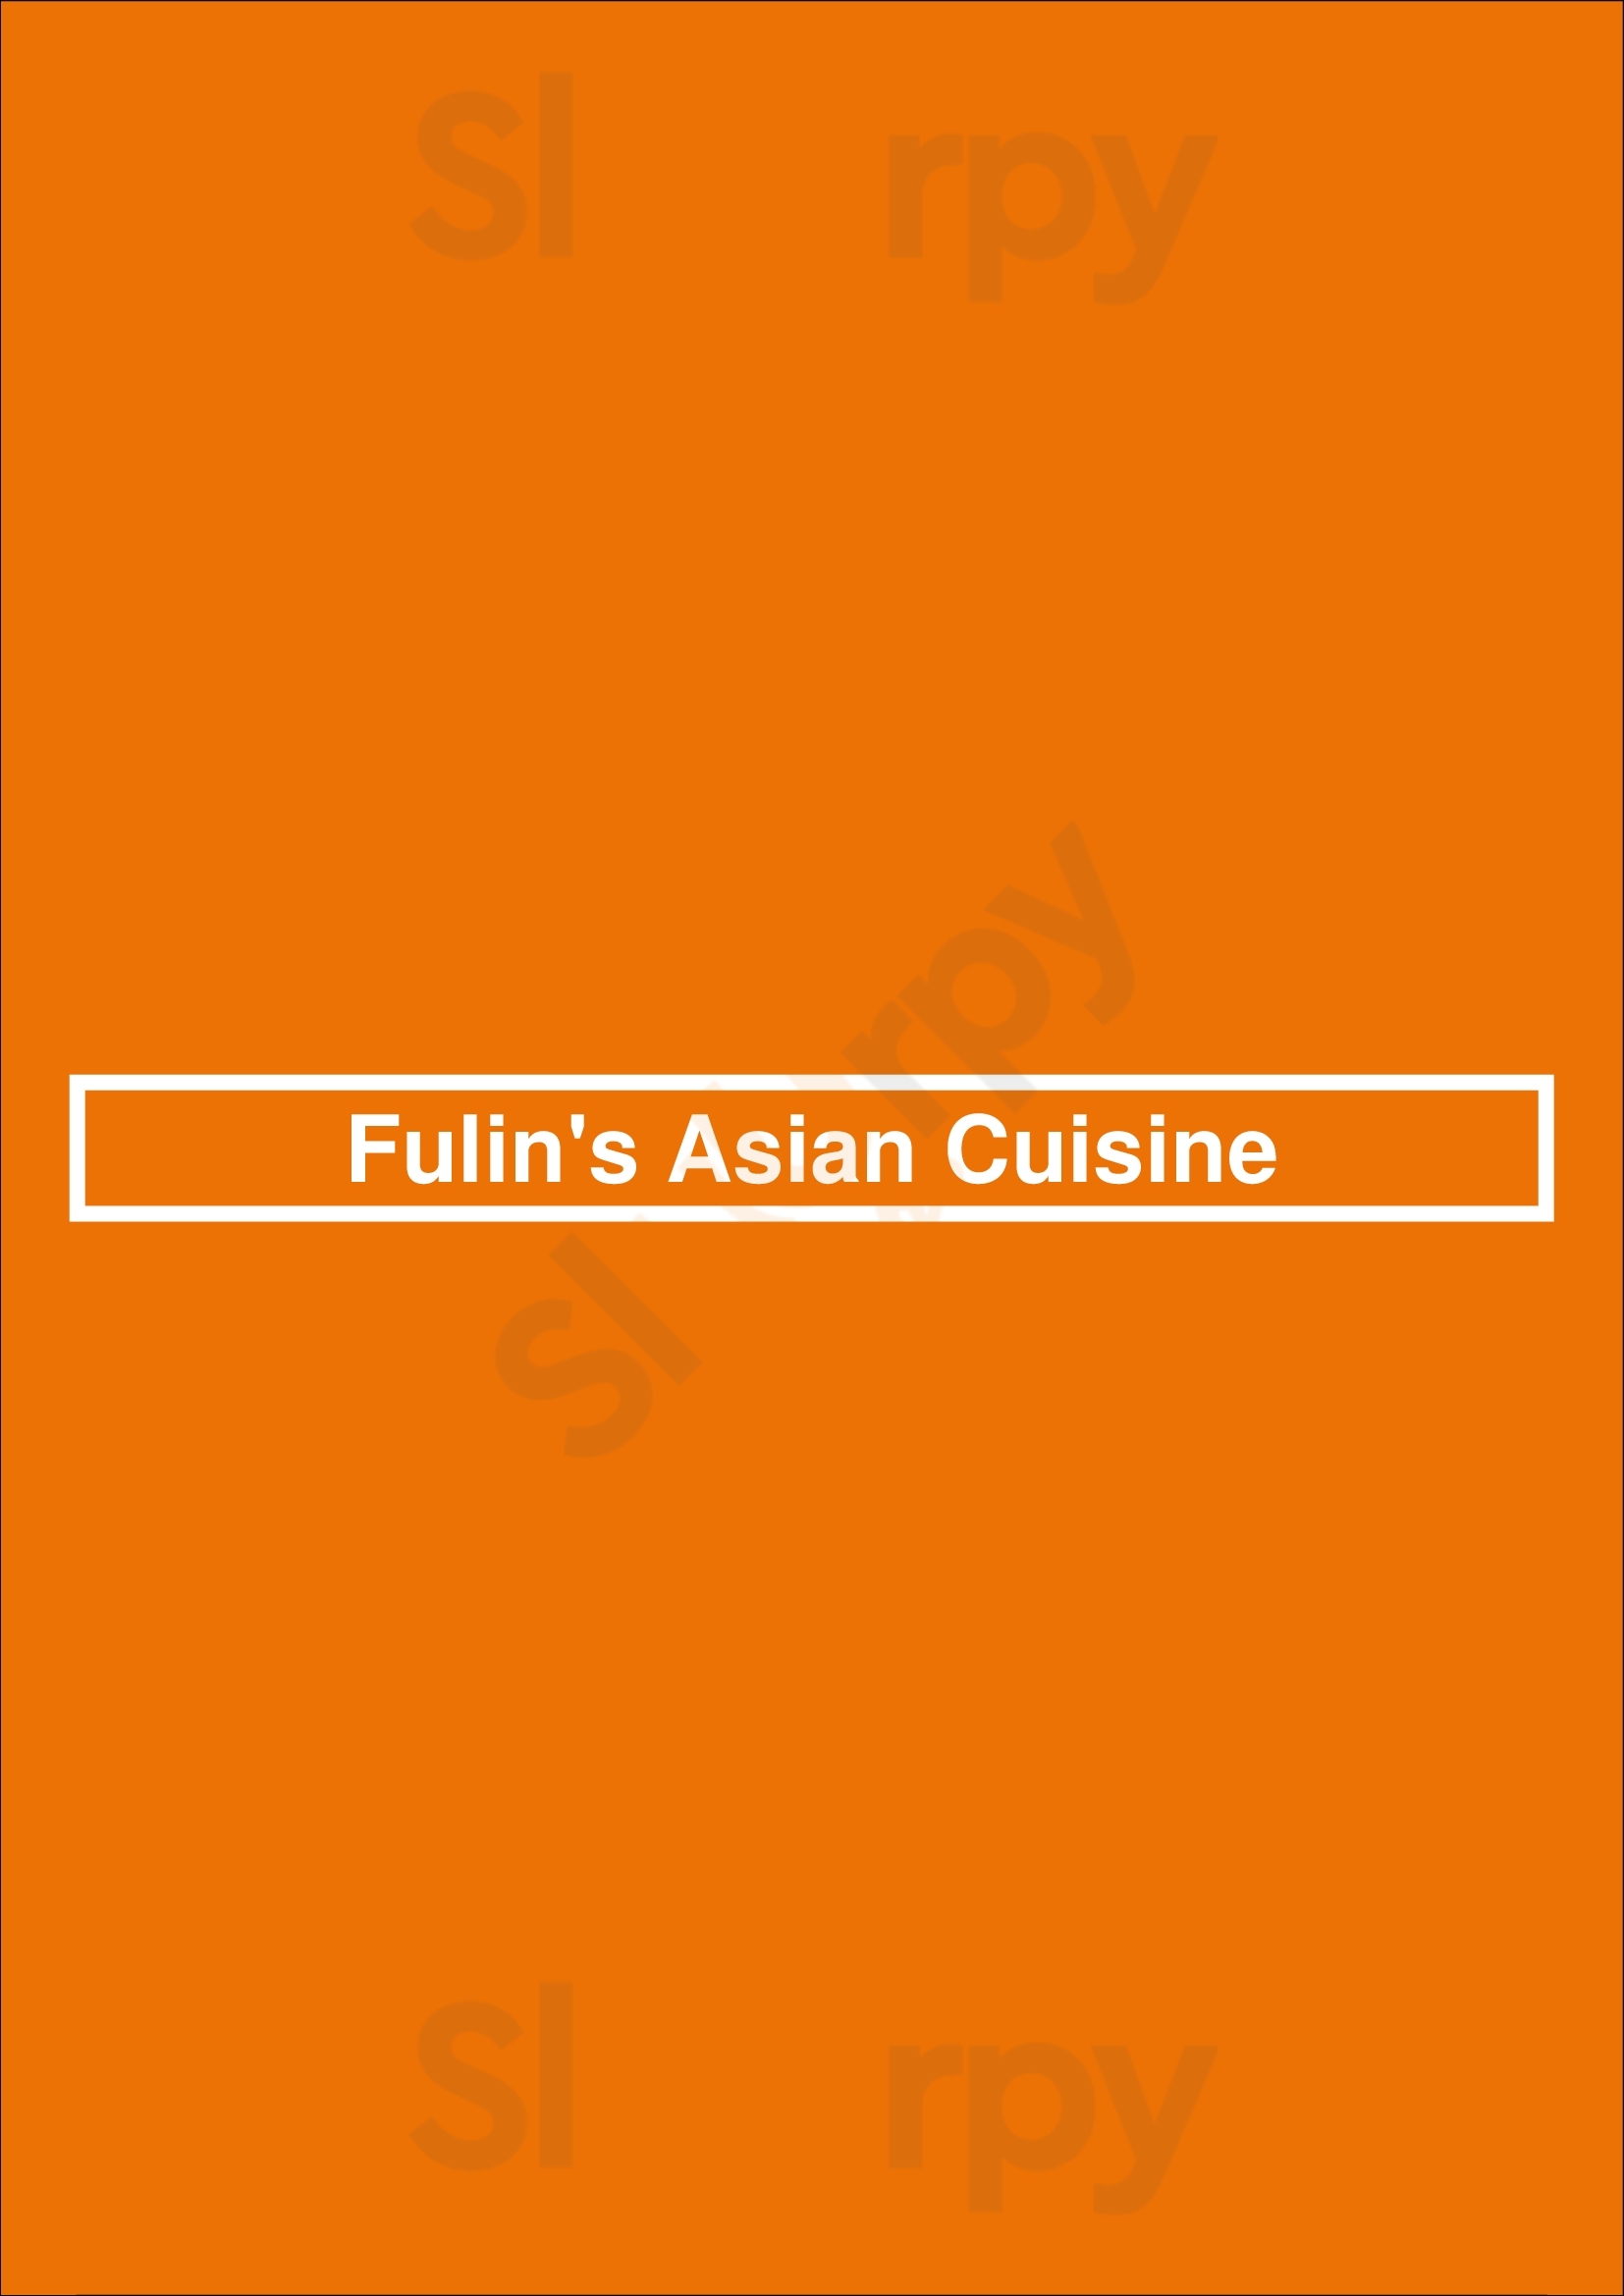 Fulin's Asian Cuisine Mount Juliet Menu - 1